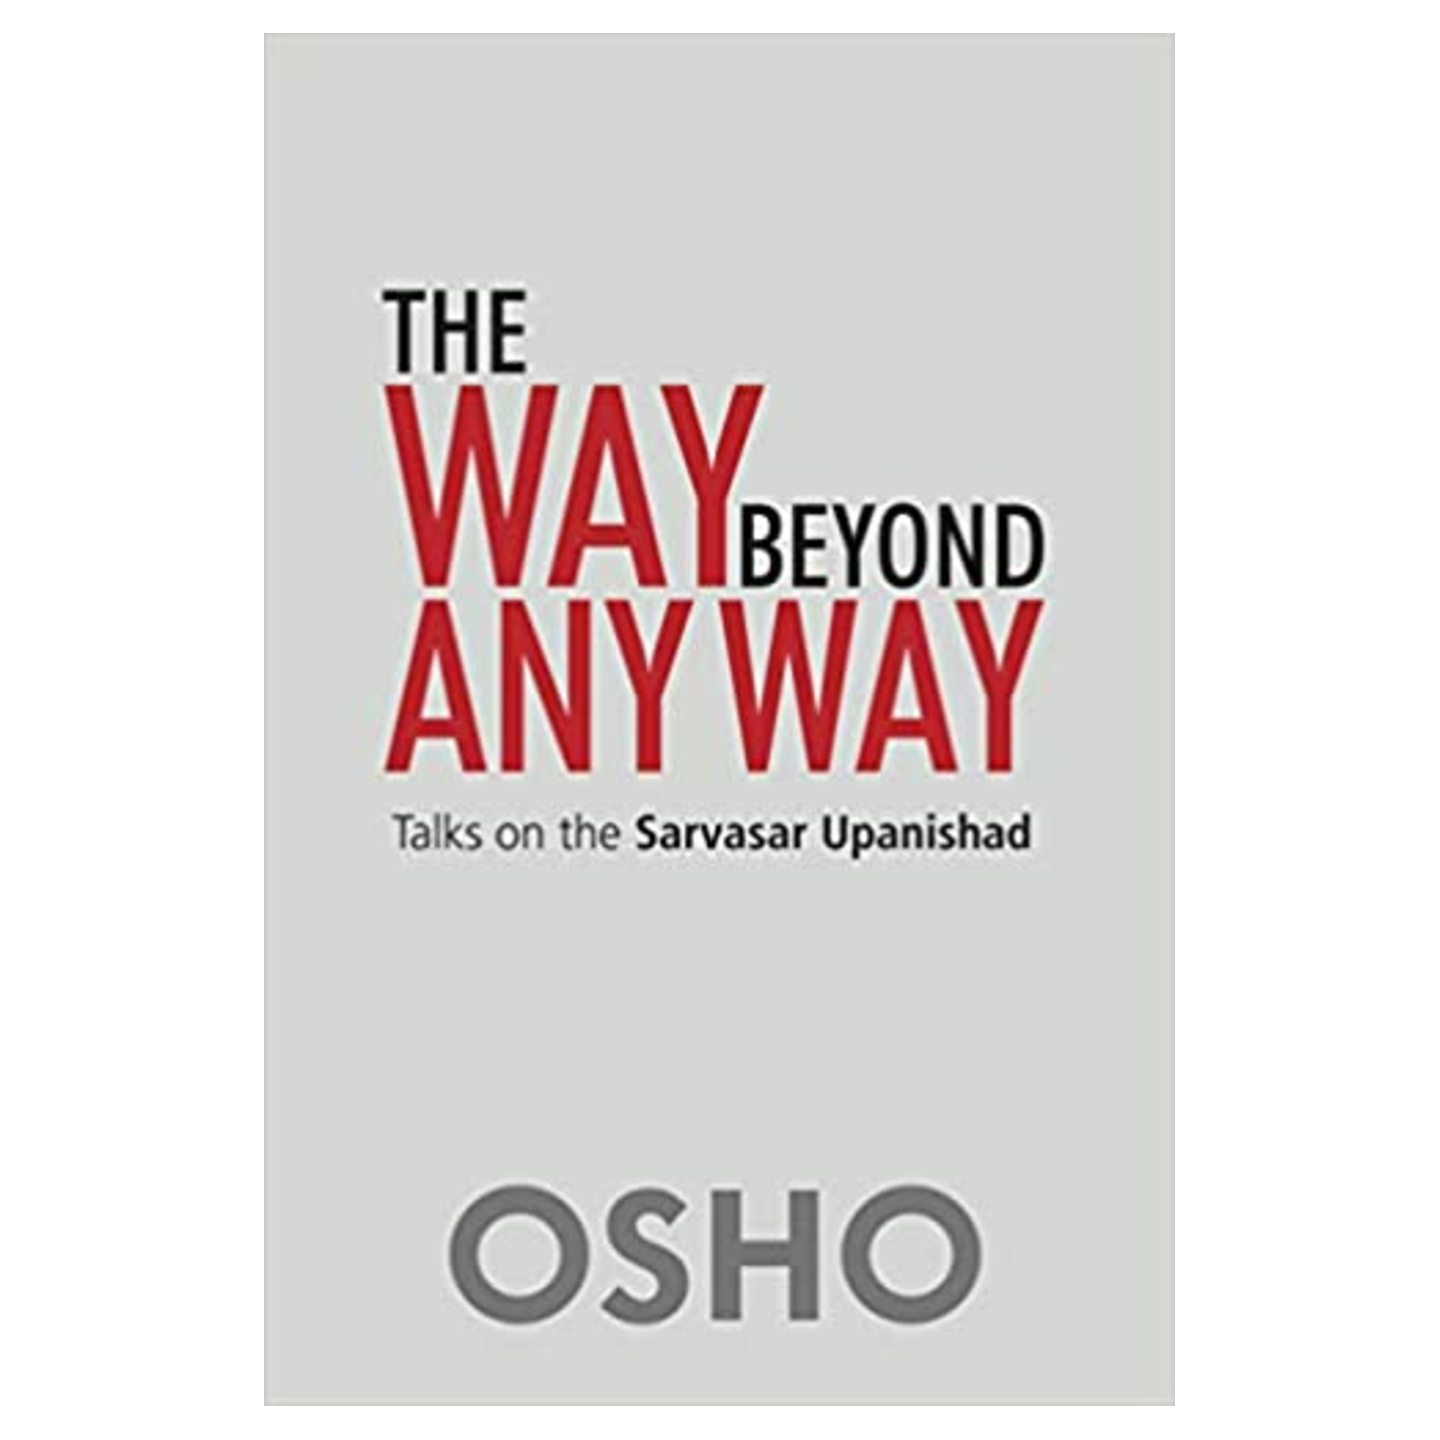 The Way Beyond Any Way - Talks on the Sarvasar Upanishad